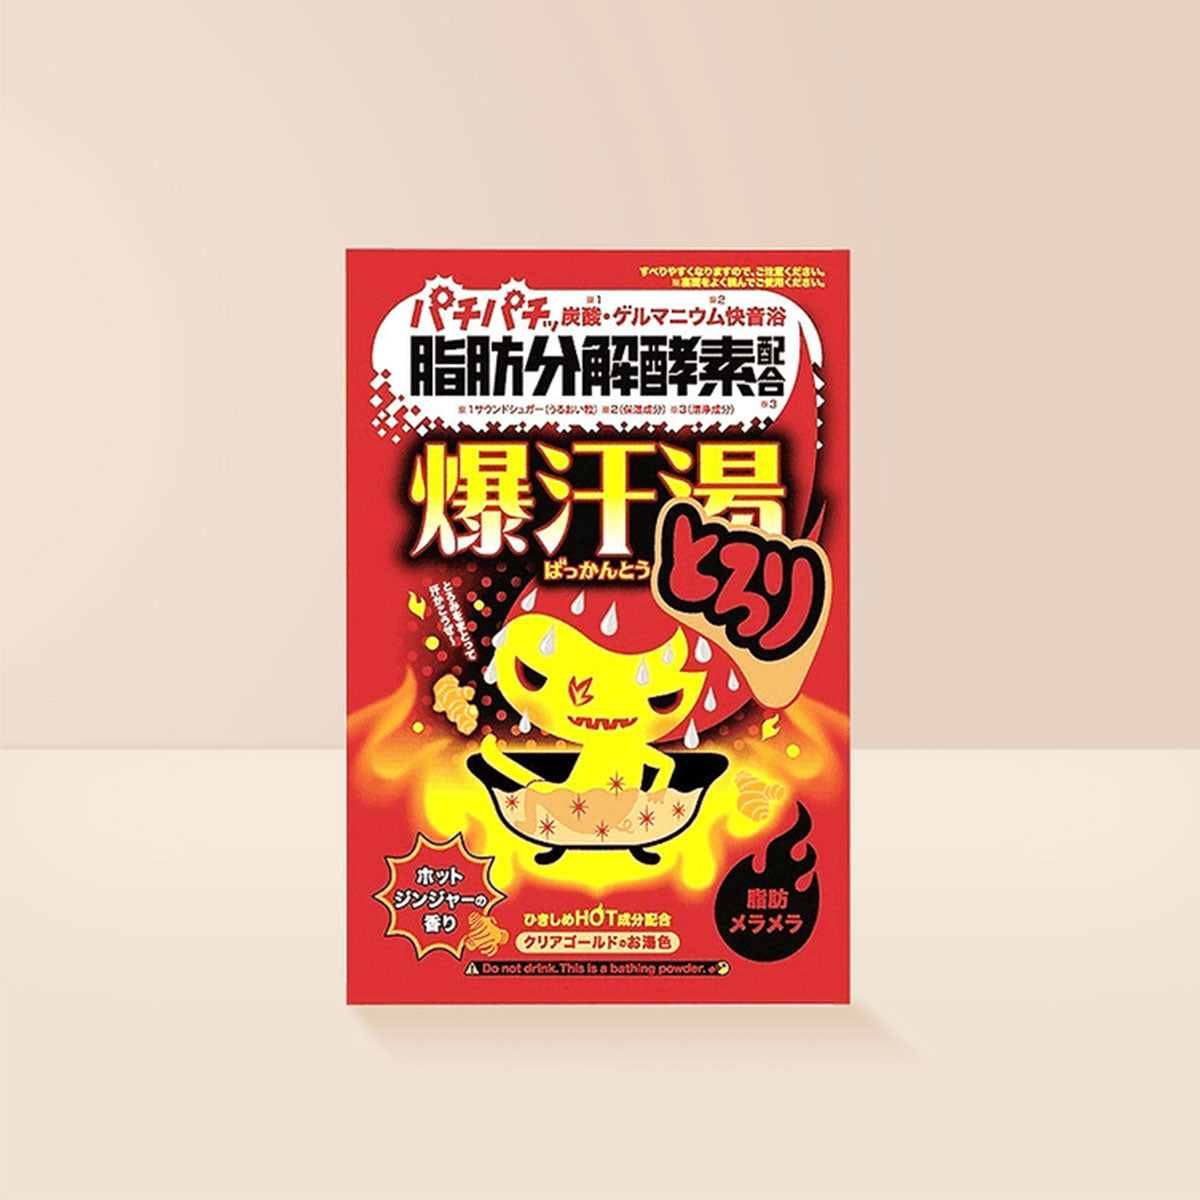 Bakuhito Fat Burning Bath Salt #Hot Ginger Scent 60g